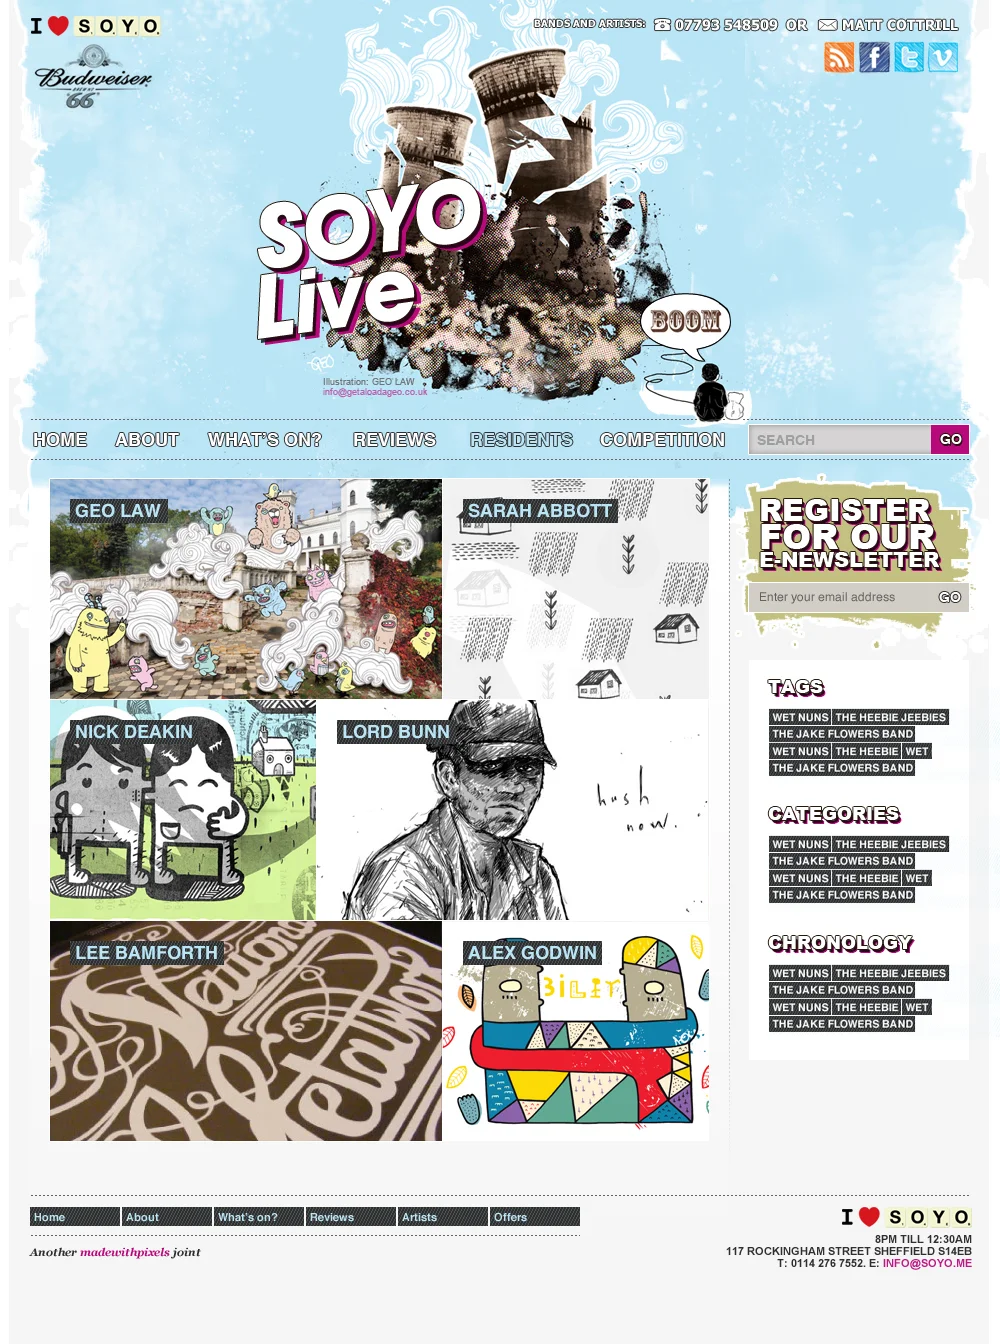 SoYo Live website